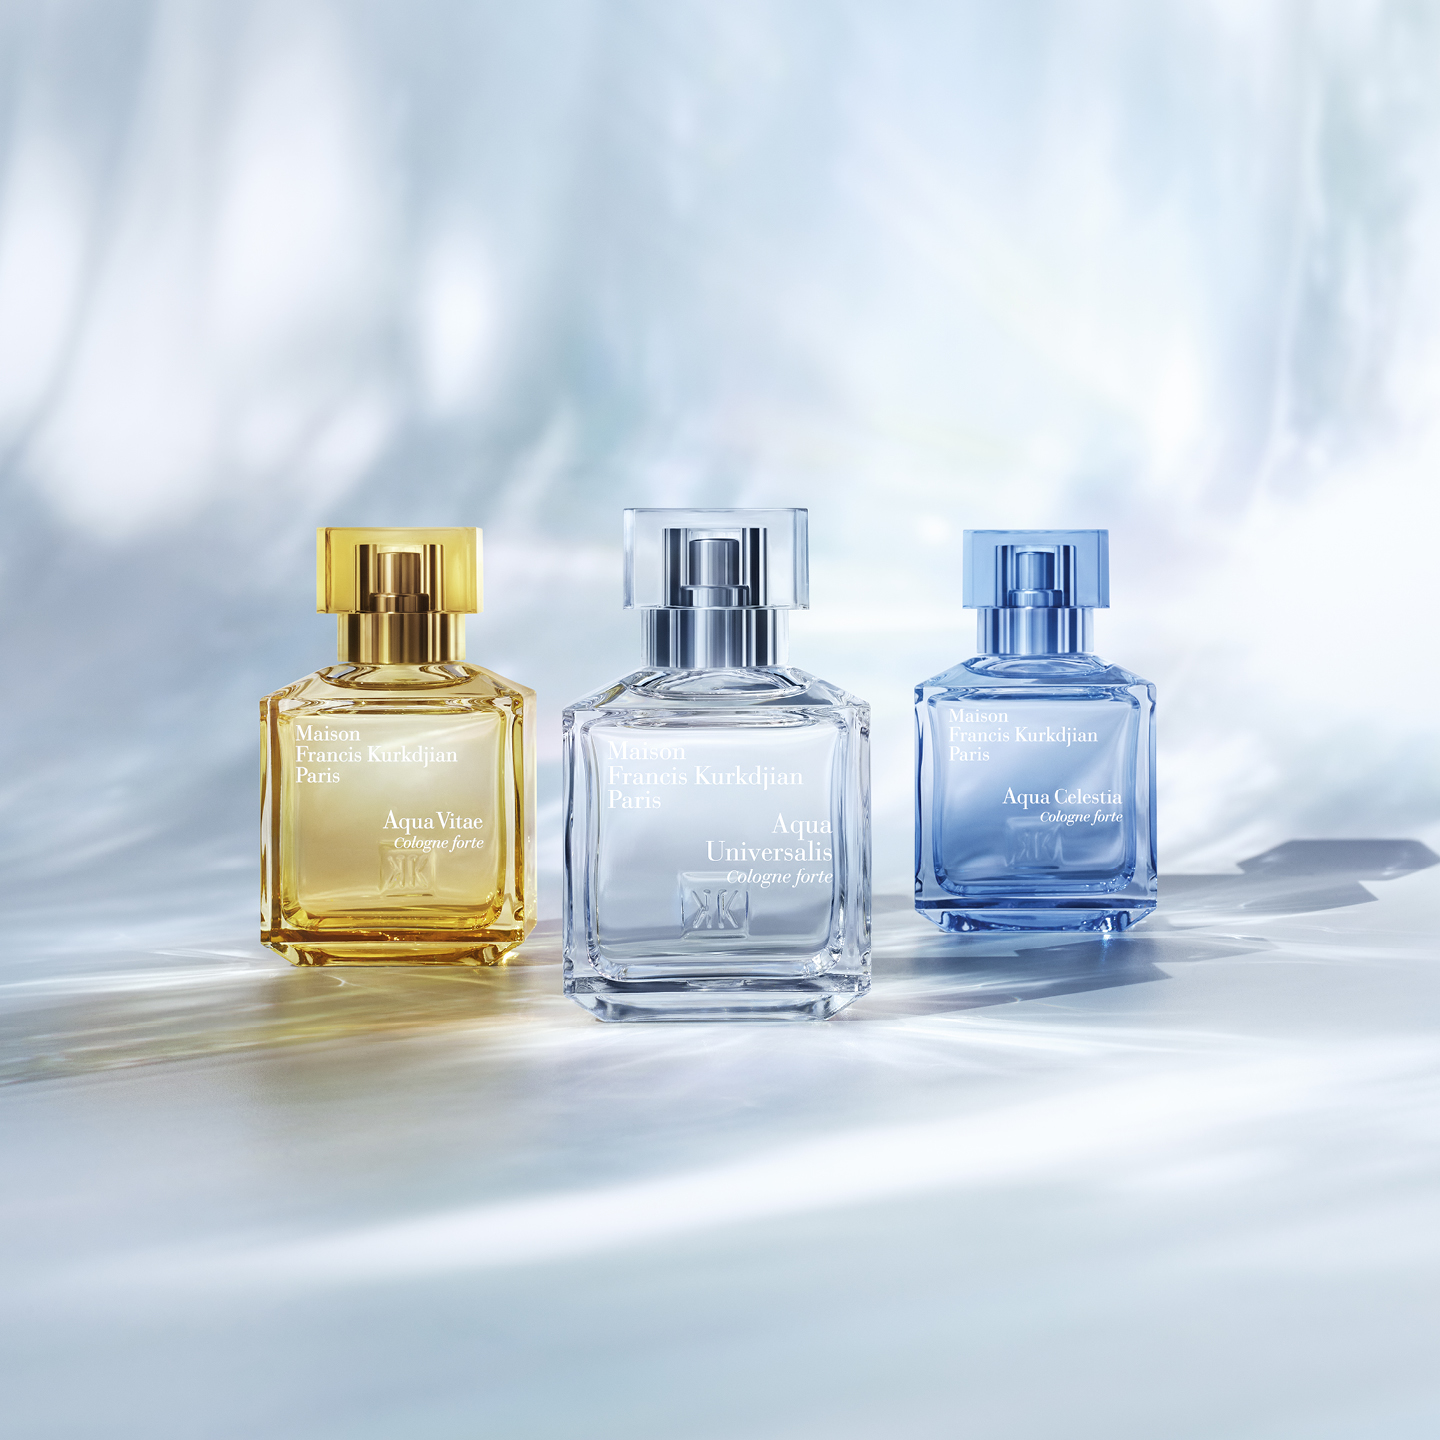 LOUIS VUITTON IMAGINATION vs MFK AQUA MEDIA COLOGNE  The 2 Best Fresh  Fragrances on the Market 